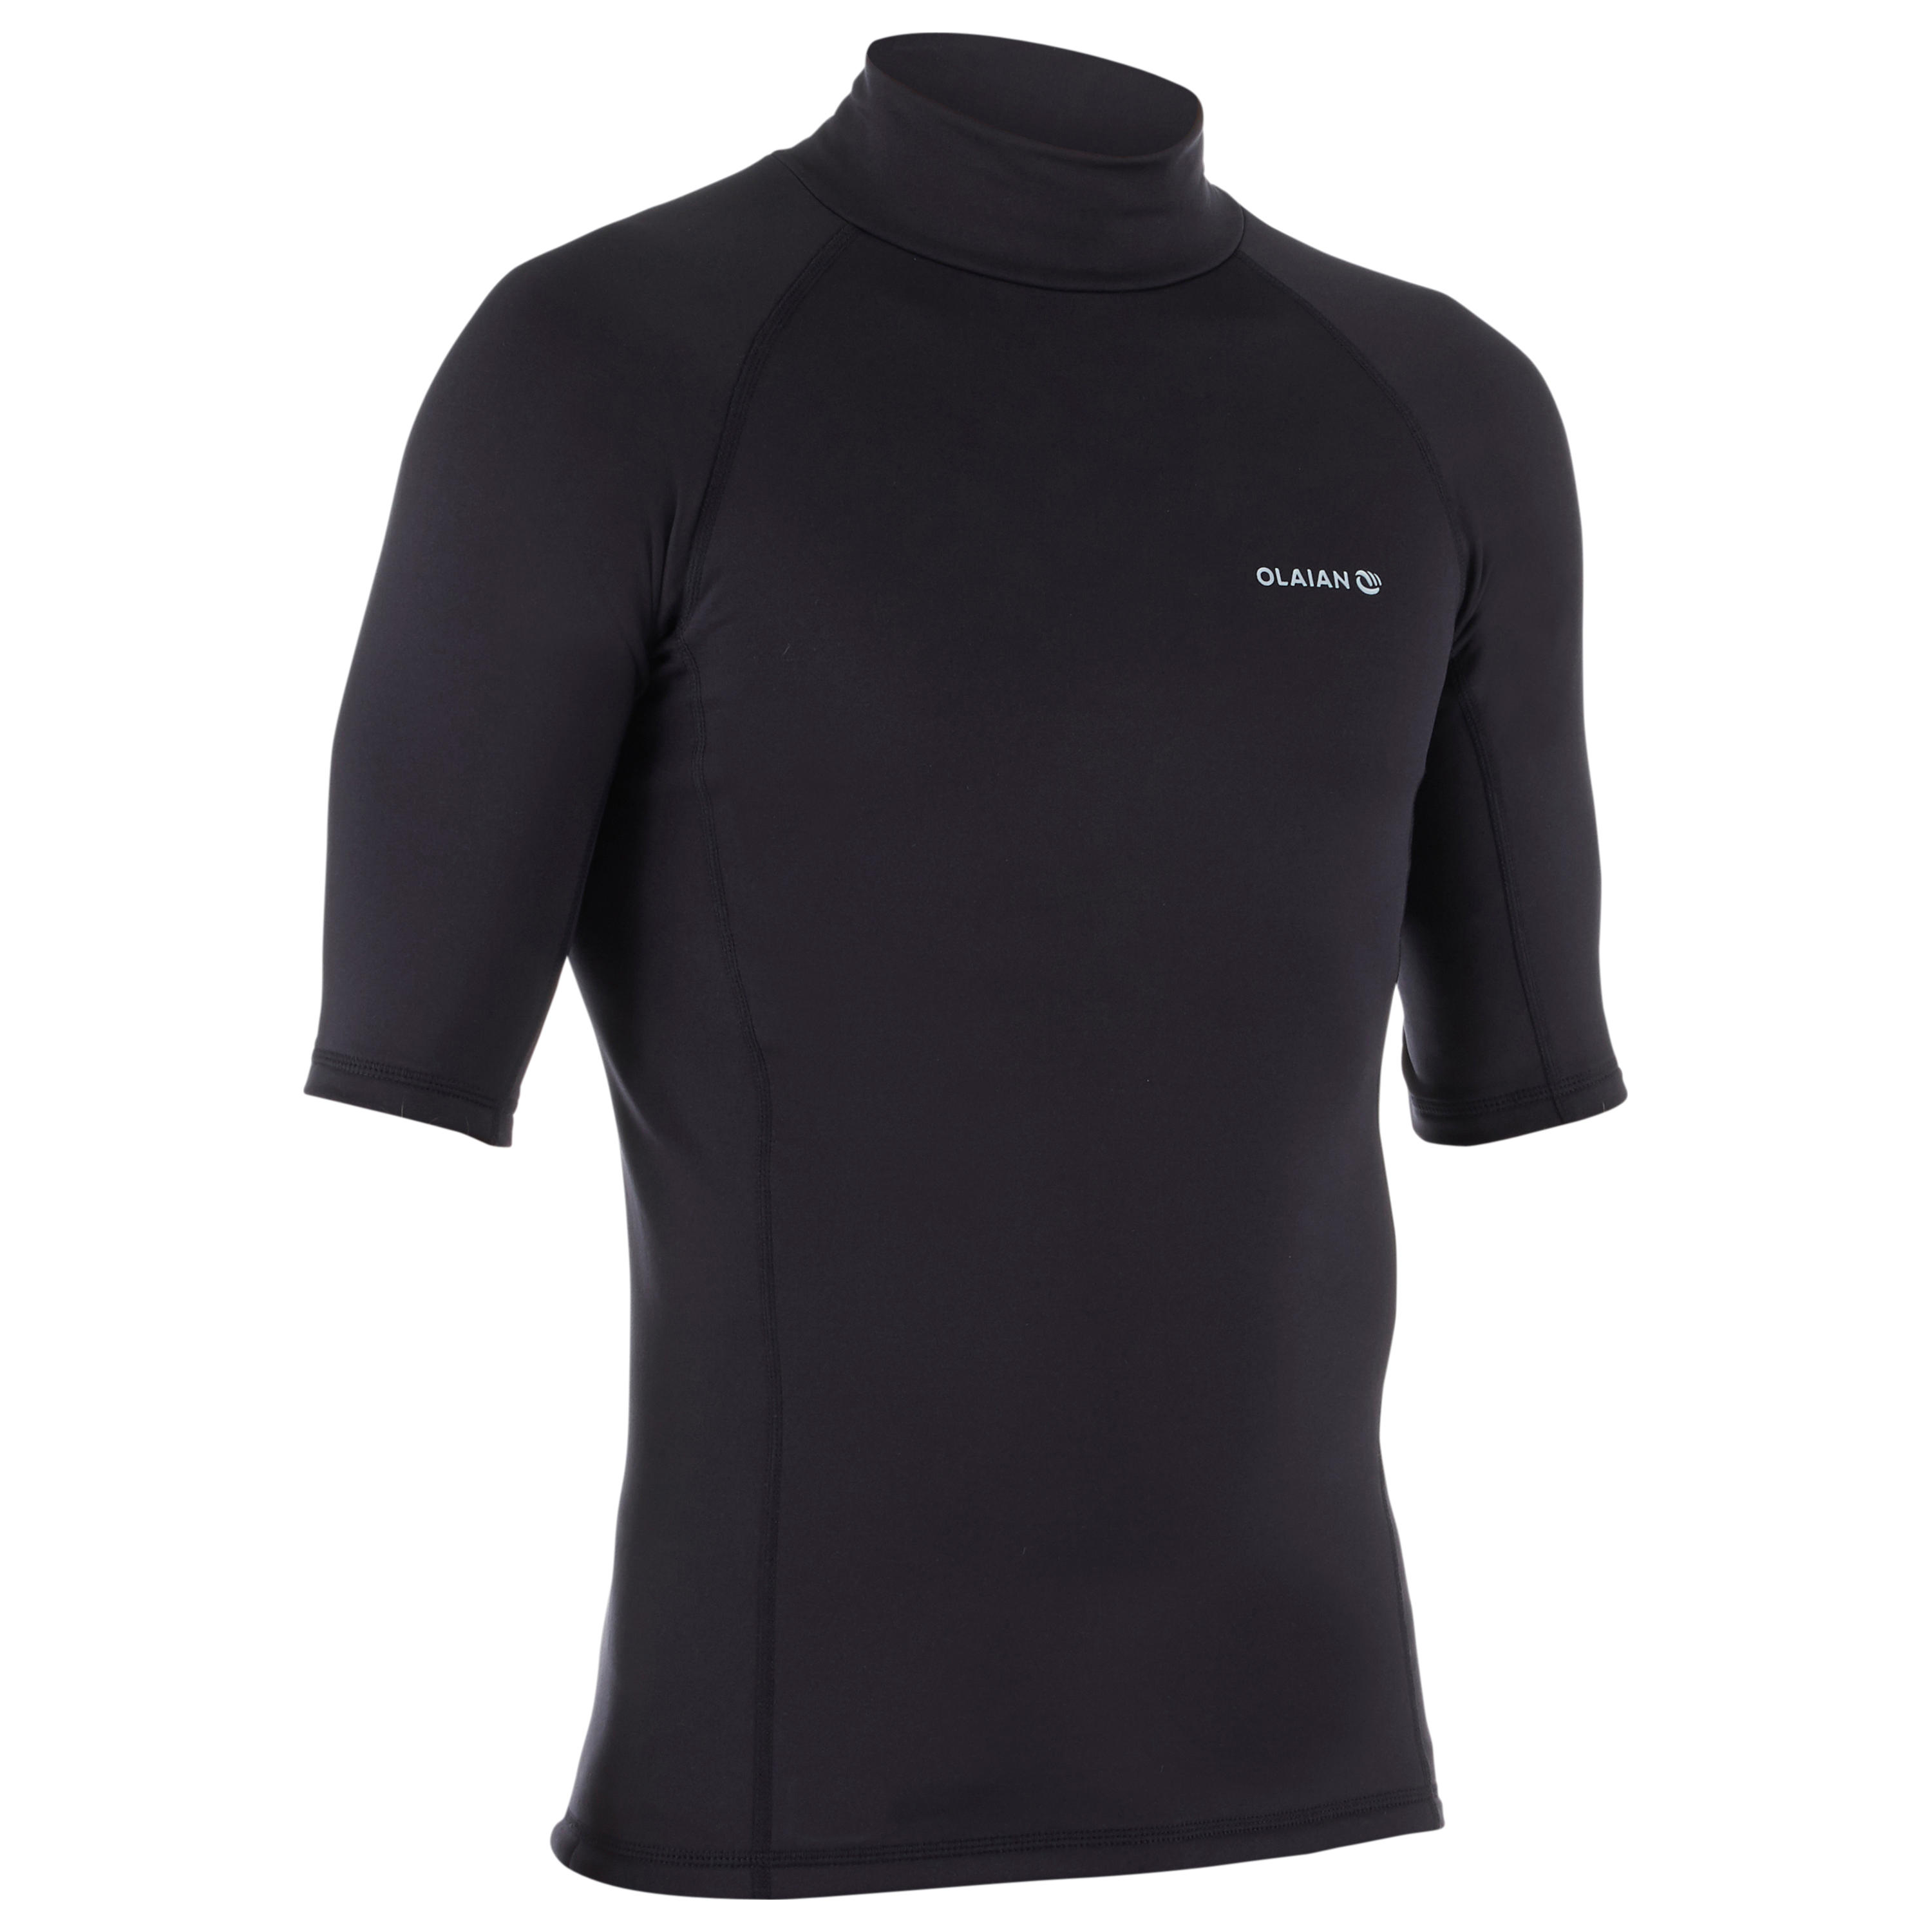 OLAIAN UV-Shirt Herren UV-Schutz 50+ 900 mit Flecce schwarz XS